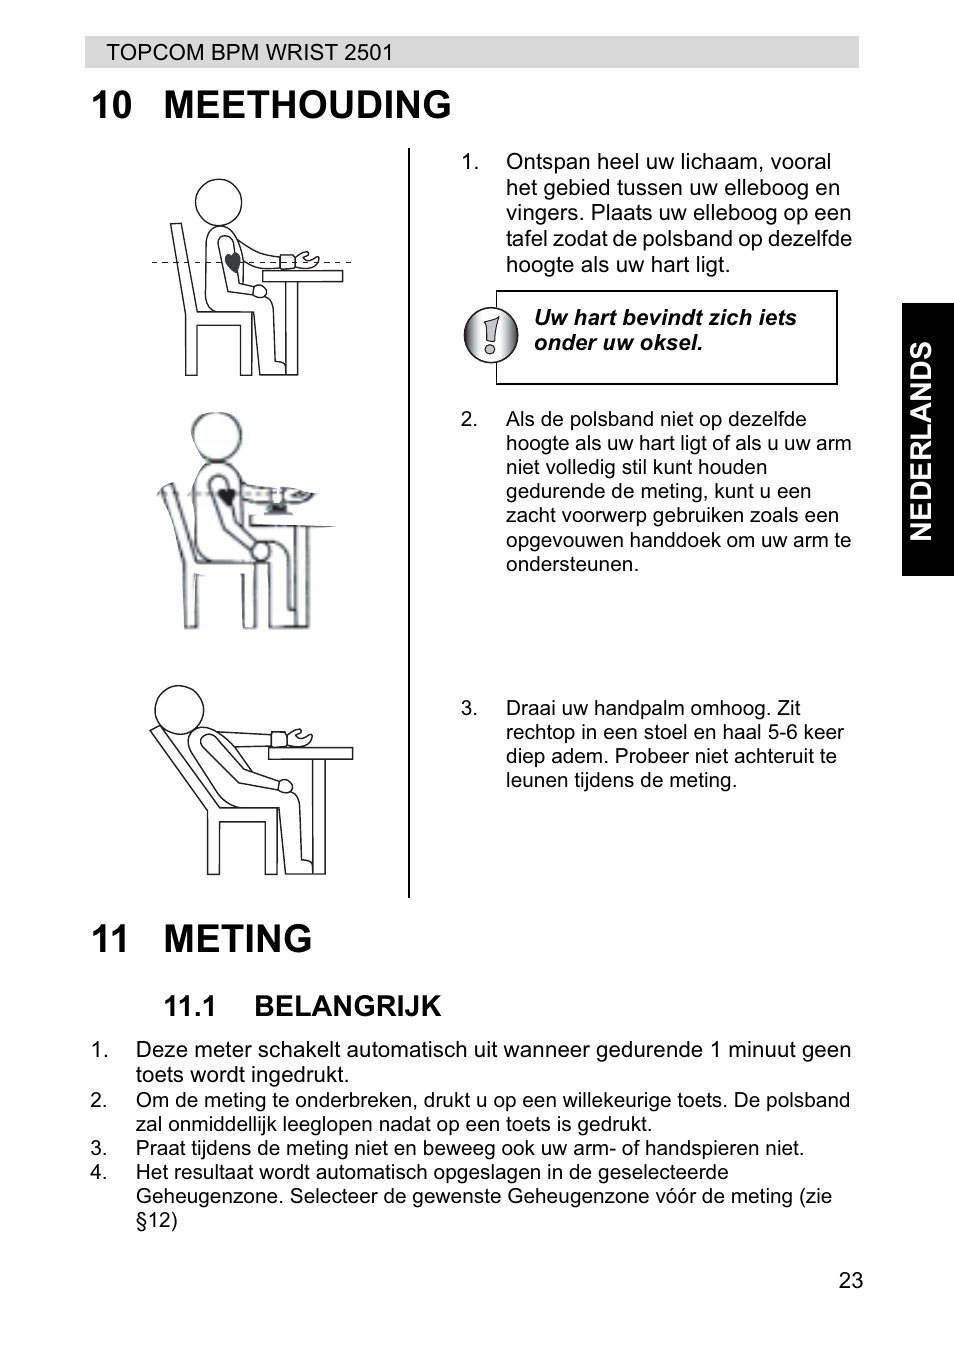 10 meethouding 11 meting, Nederlands, 1 belangrijk | Topcom BPM WRIST 2501 User Manual | Page 23 / 120